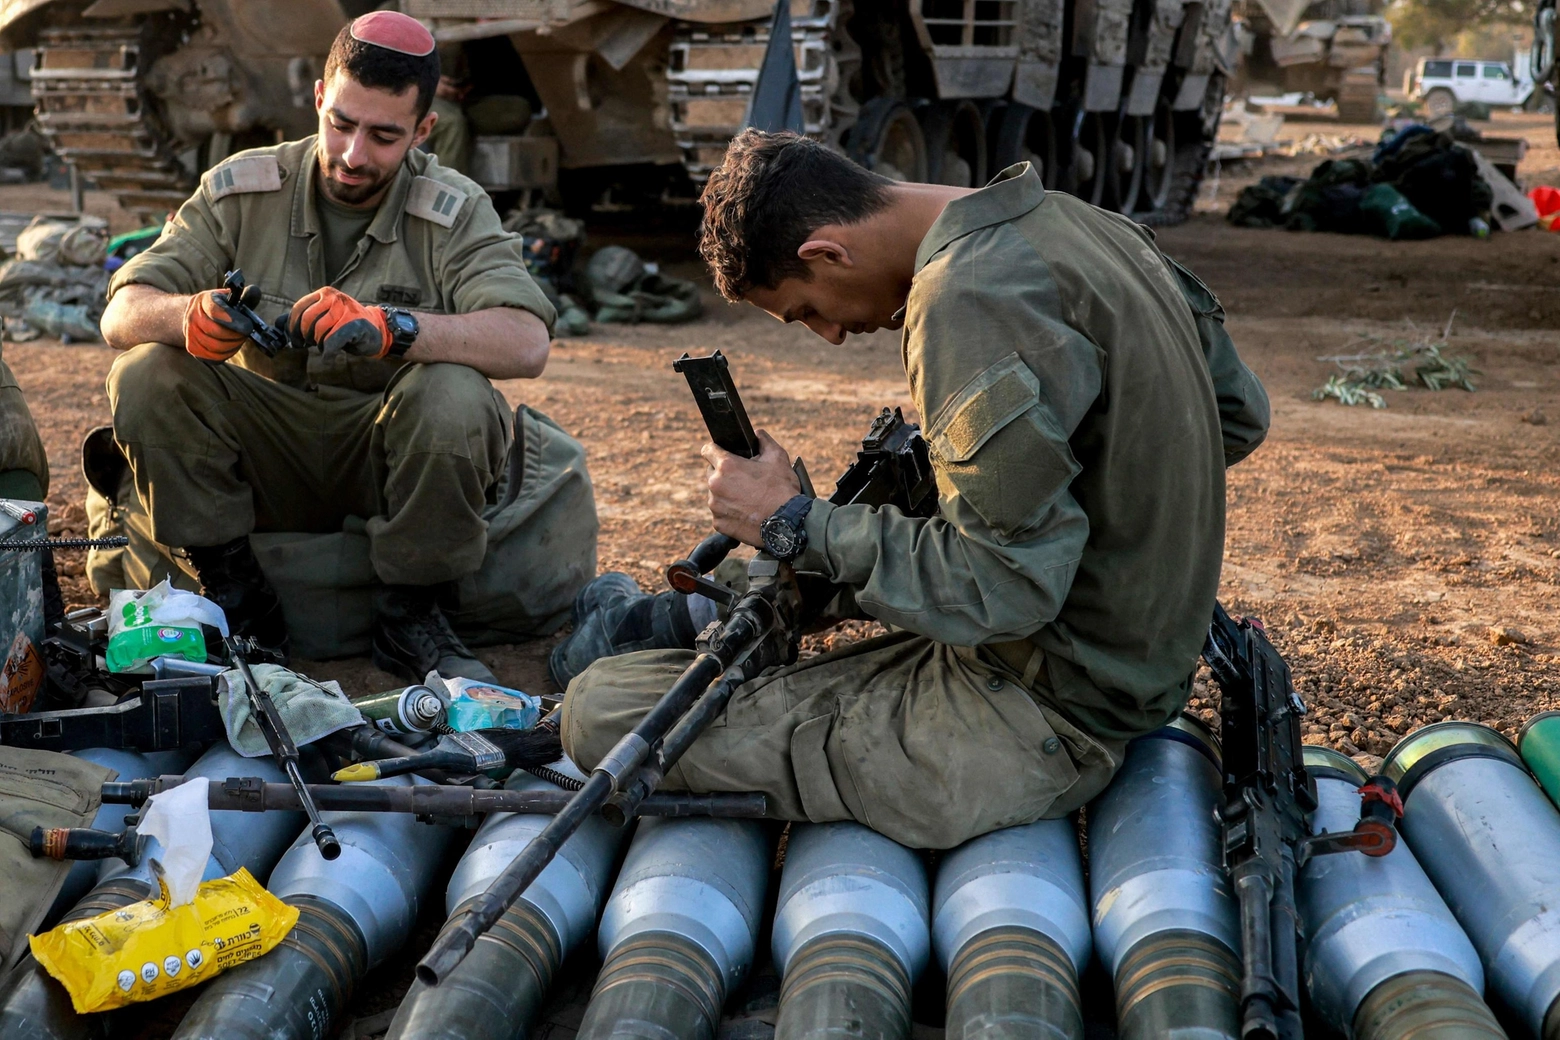 Soldati israeliani puliscono le armi (Ansa)